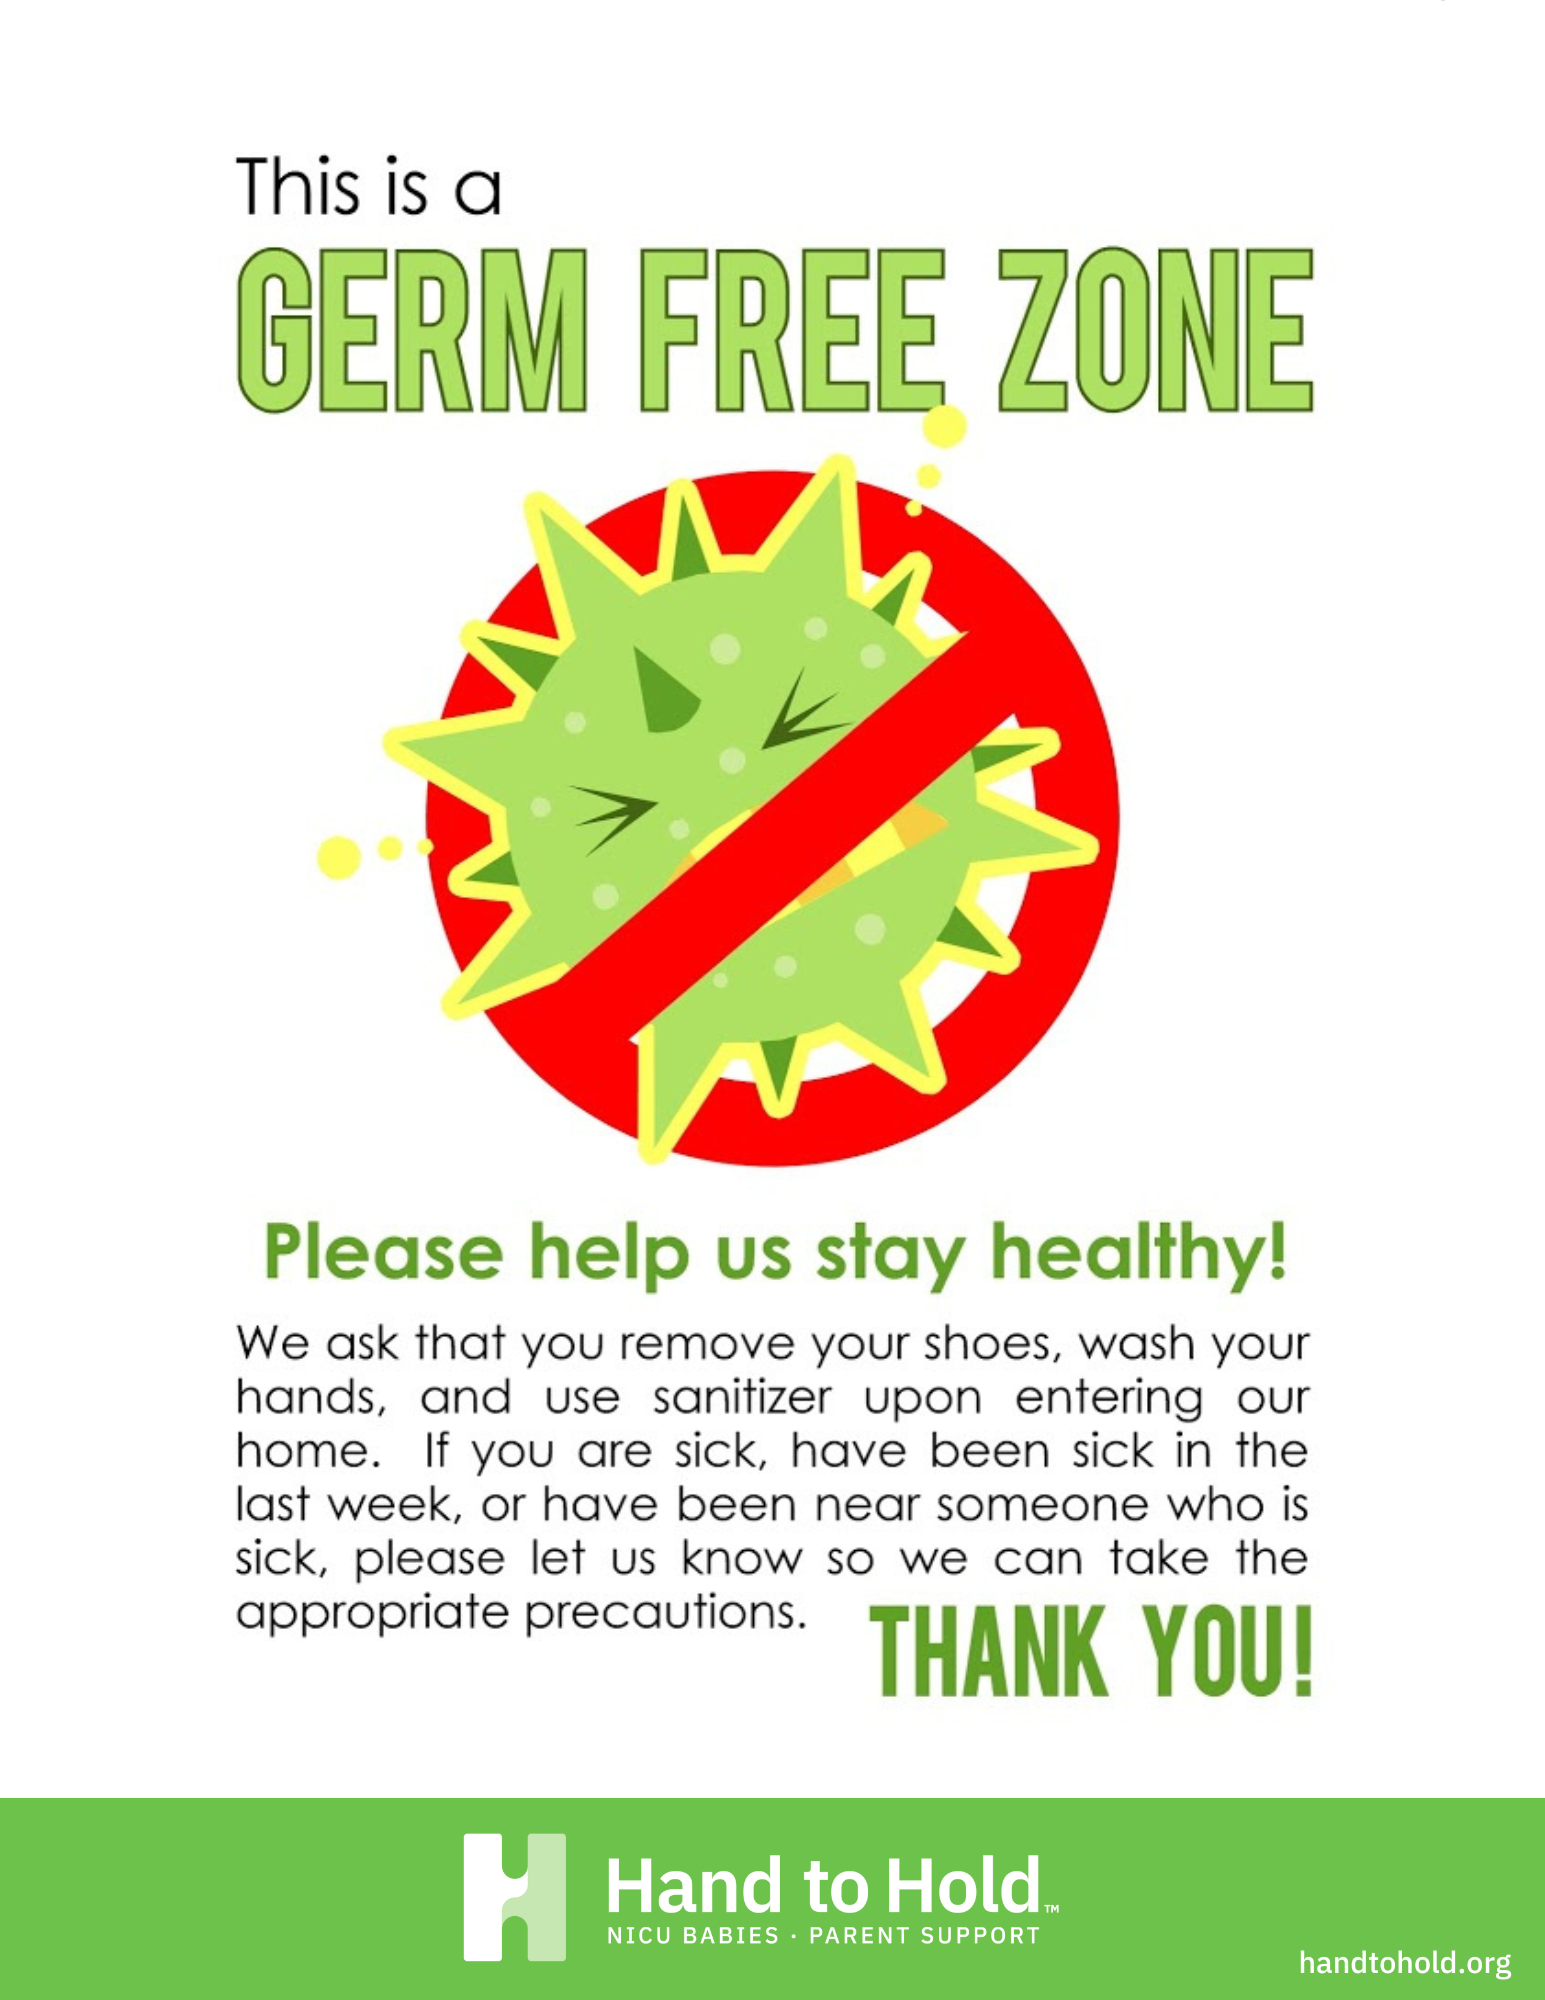 isolation, rsv season, germ free zone